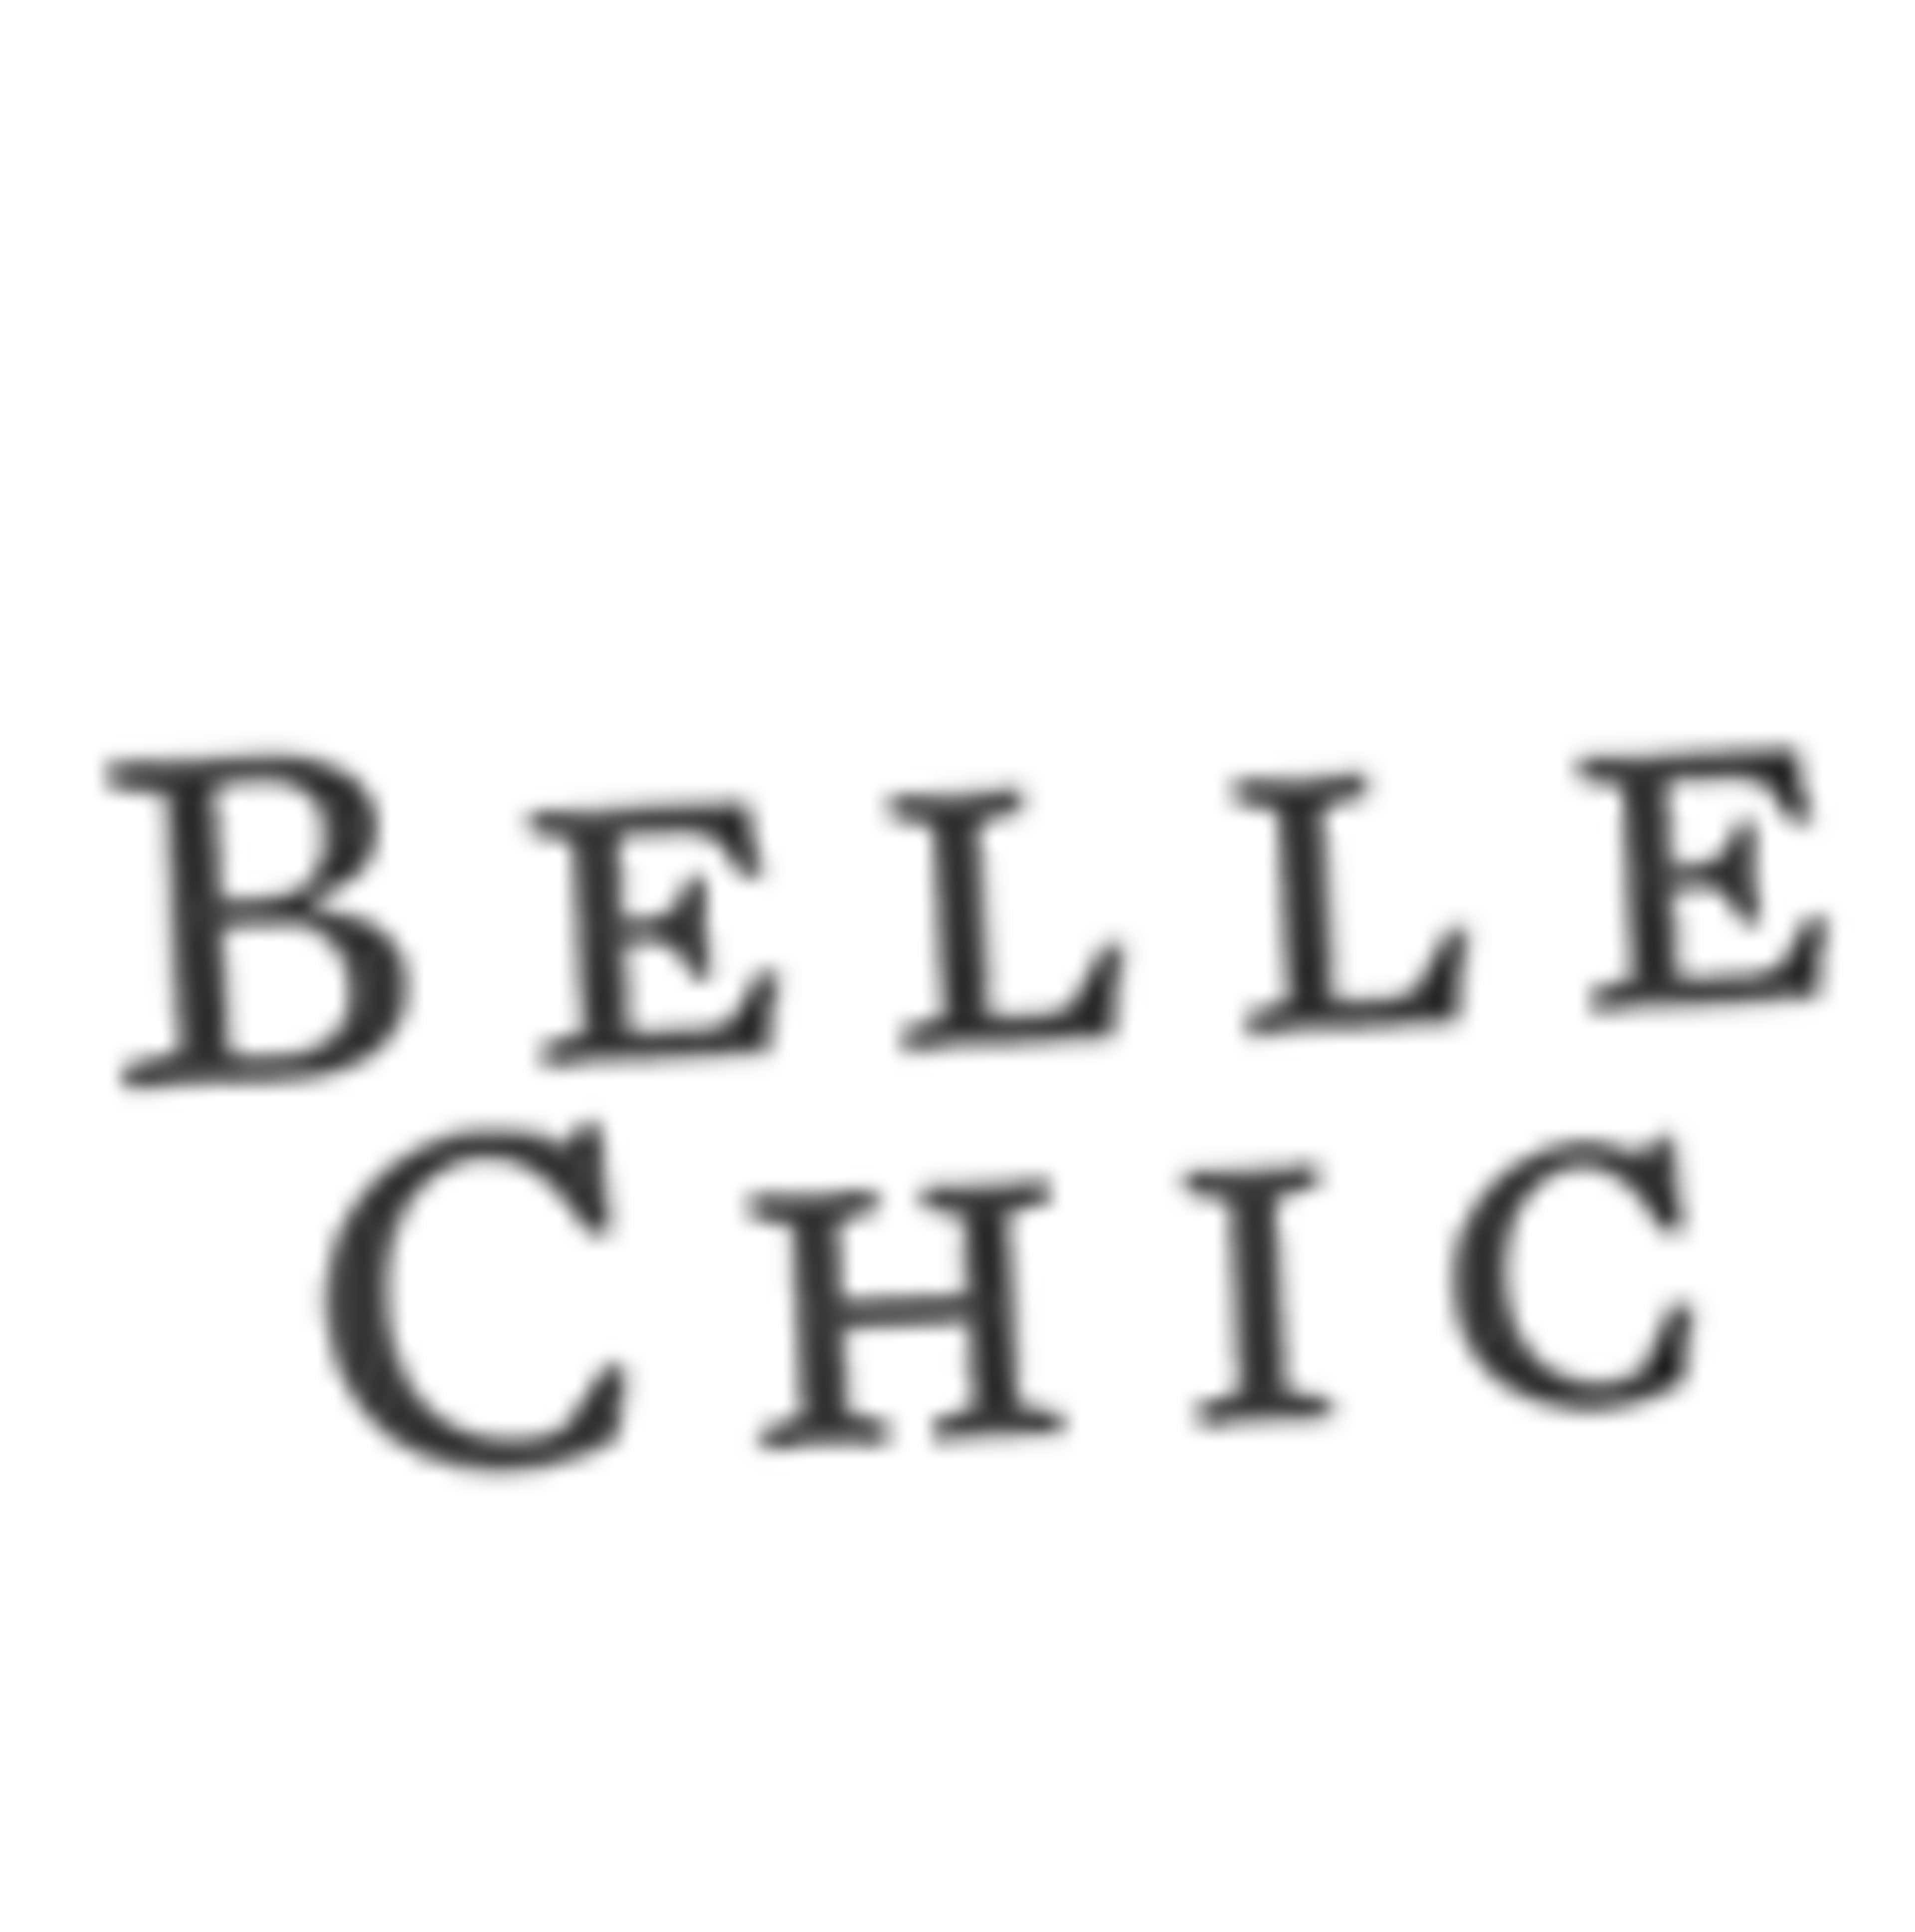 Belle Chic Code